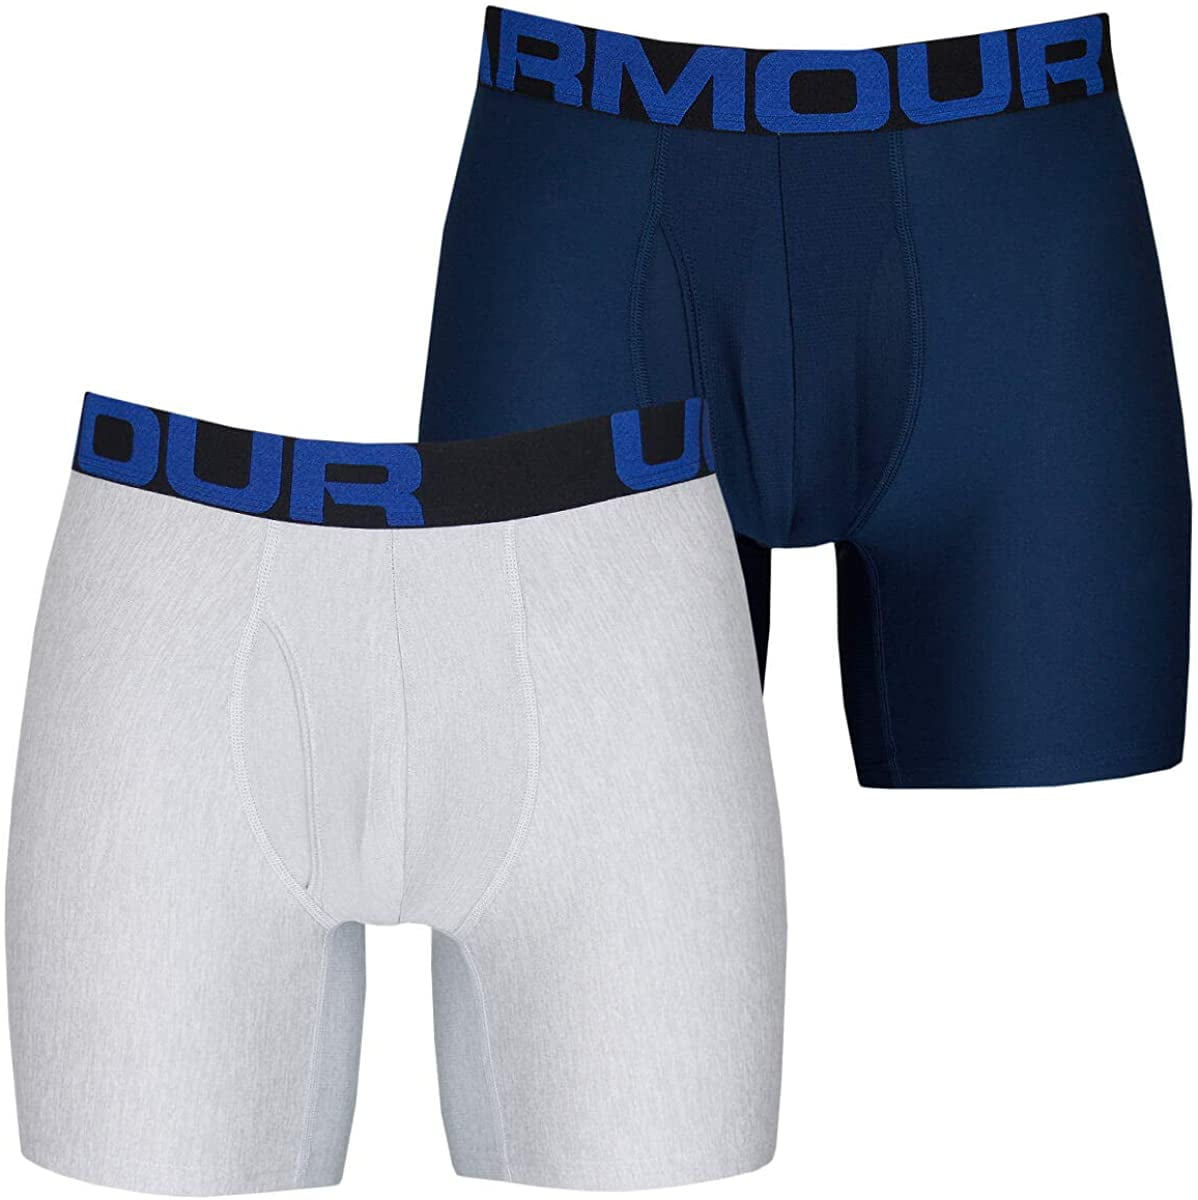 Under Armour Mens Tech 6" Boxer Jock Boxer Briefs Underwear 2 PACK New 2021